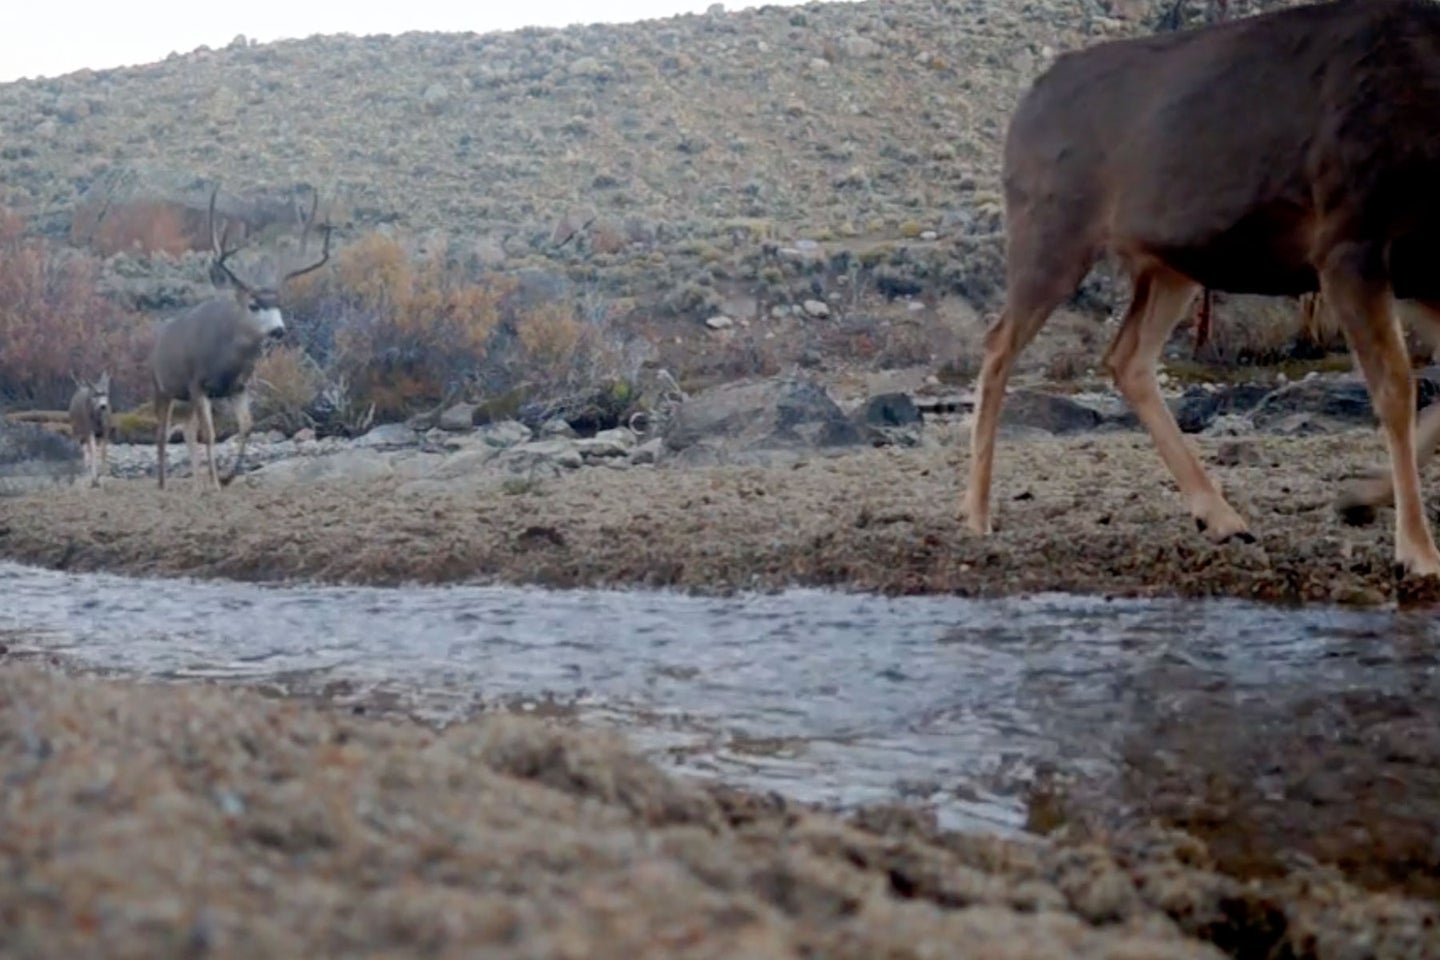 A group of mule deer migrate across a river western Wyoming.